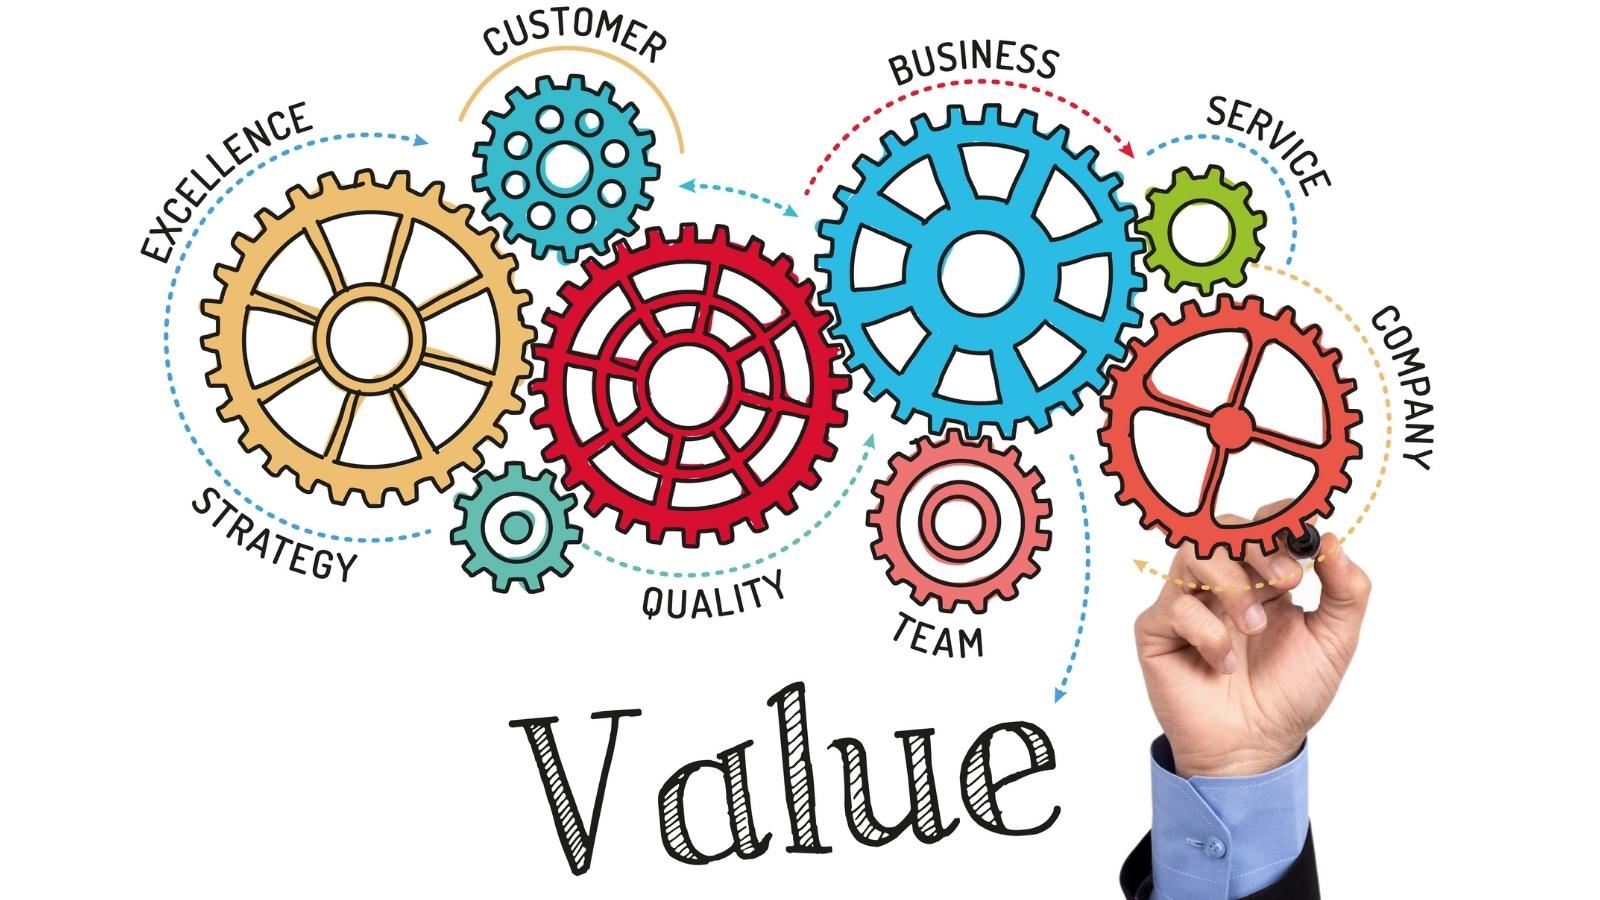 share value as a helpful entrepreneur